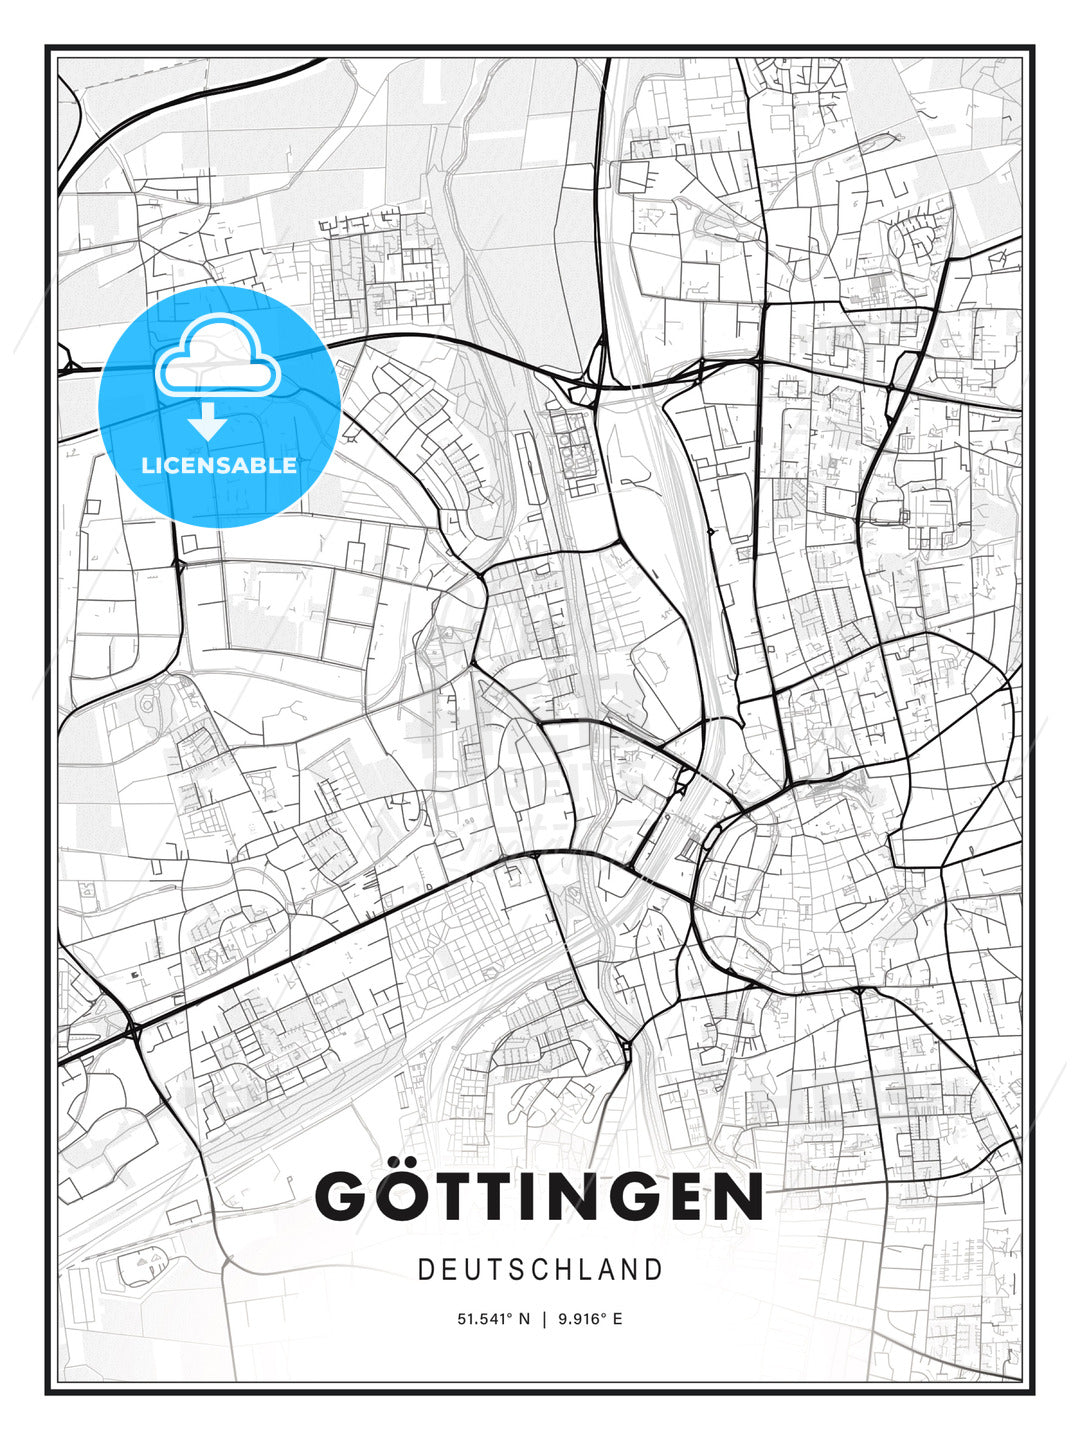 GÖTTINGEN / Gottingen, Germany, Modern Print Template in Various Formats - HEBSTREITS Sketches